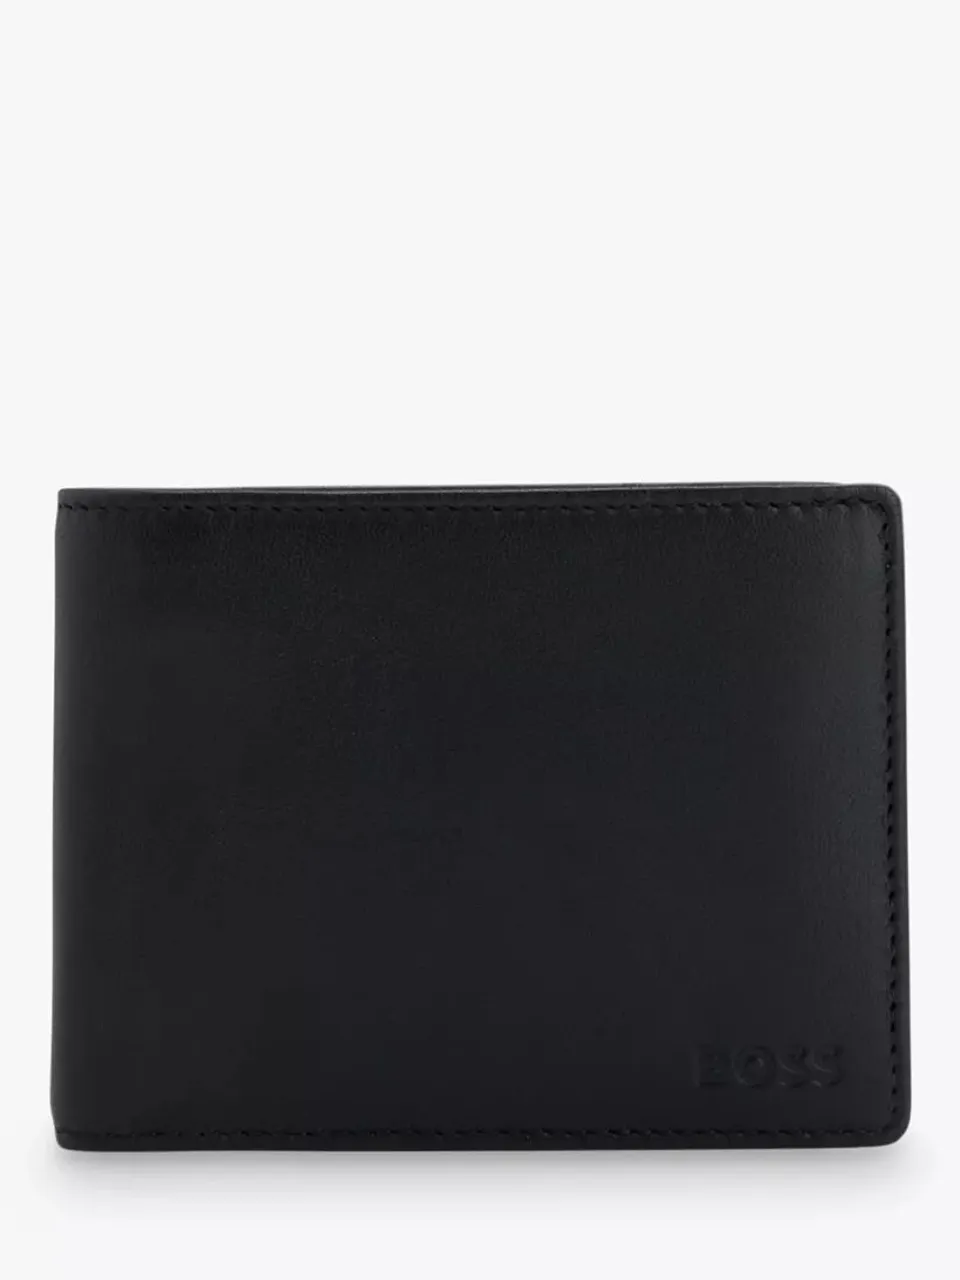 Hugo Boss BOSS Arezzo Leather Wallet, Black - Black - Male